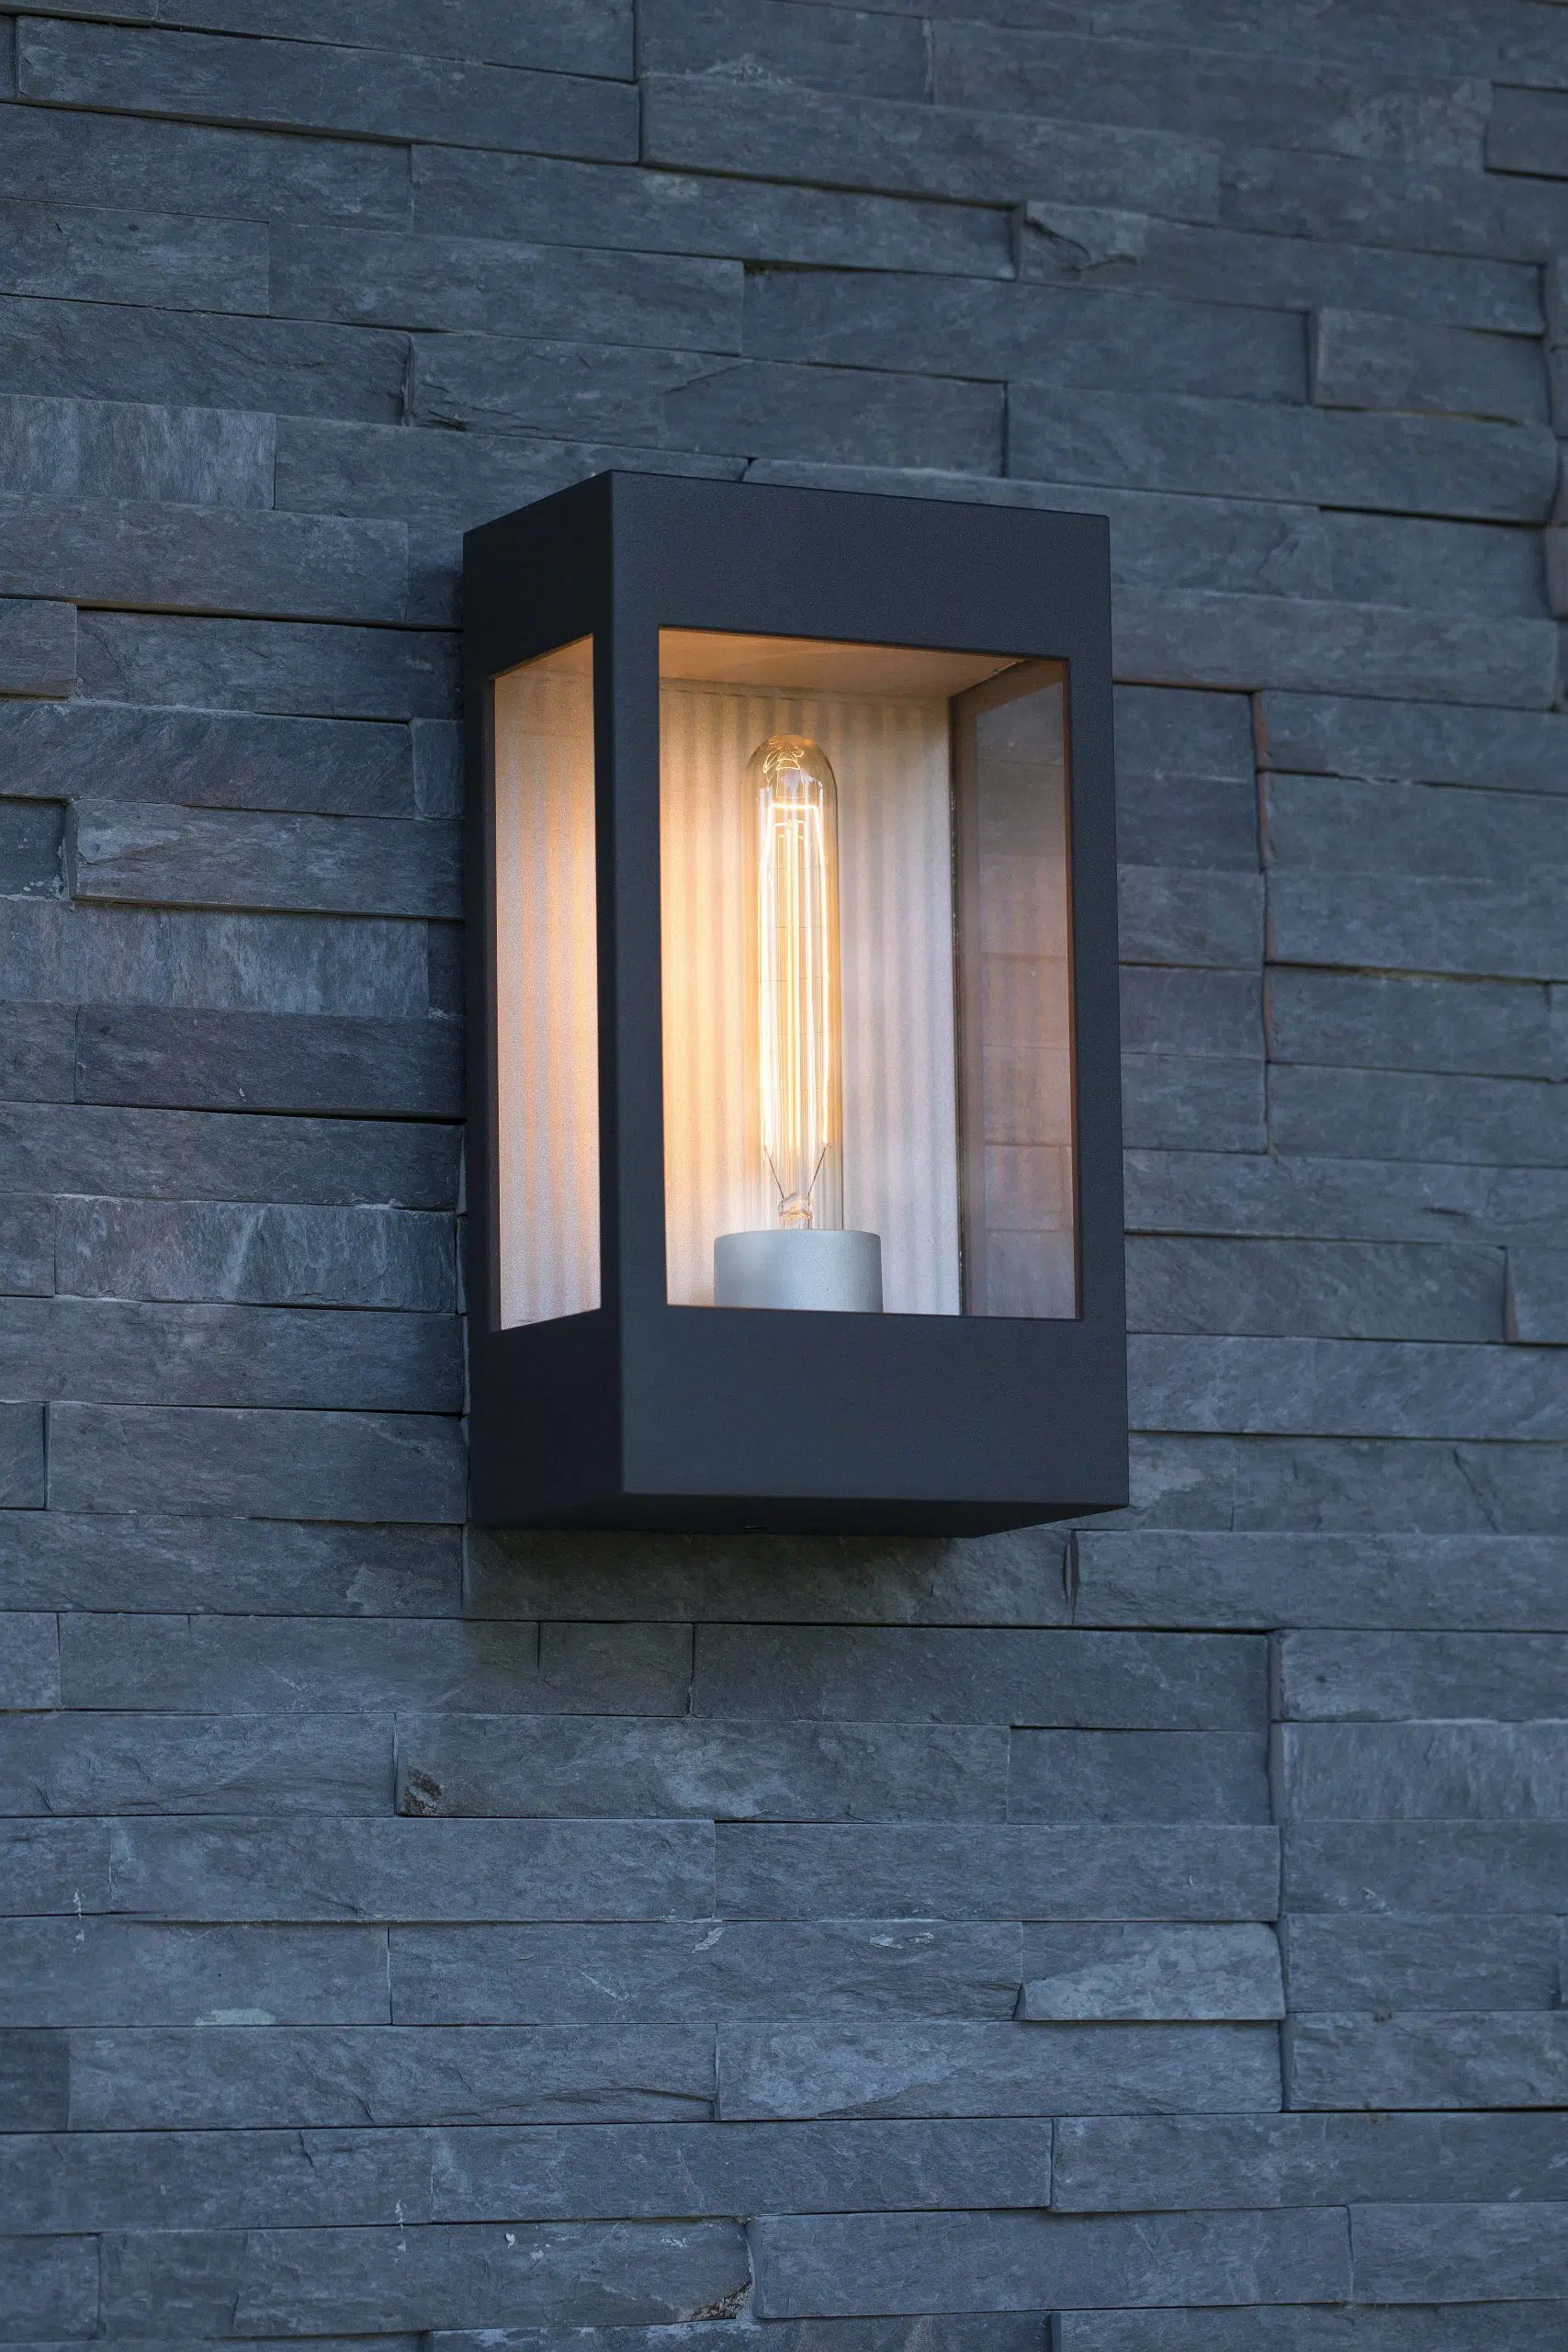 Brick wandlamp roger pradier buitenlamp tuinextra kaatsheuvel